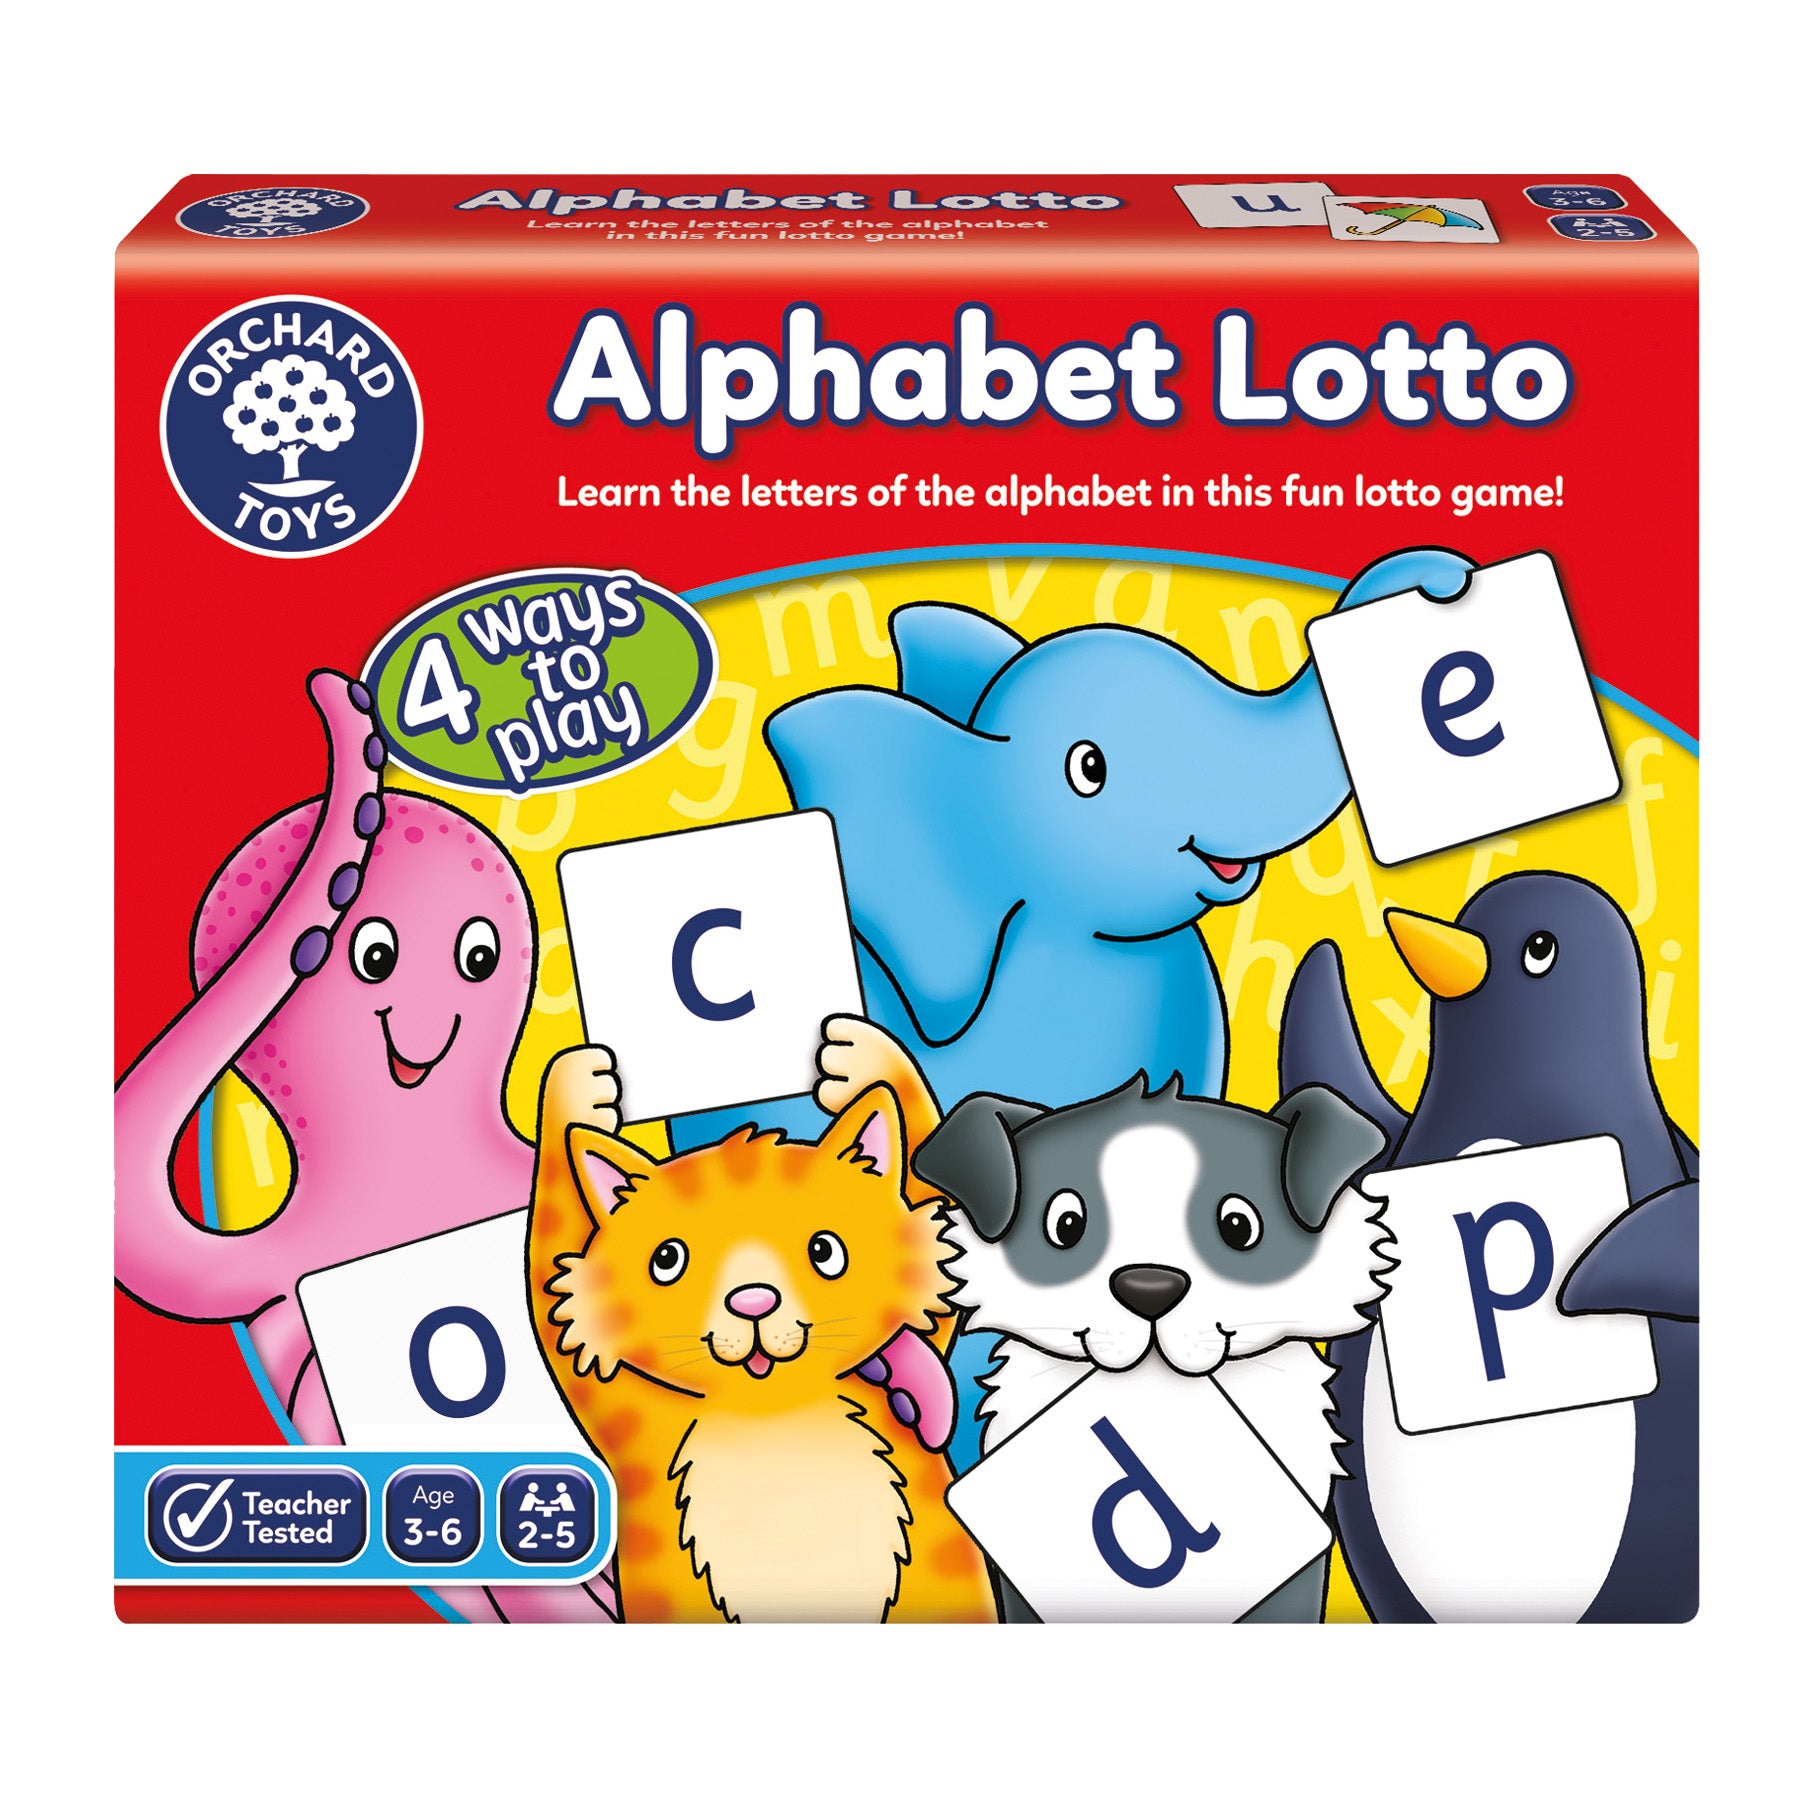 Orchard toys Alphabet Lotto Game